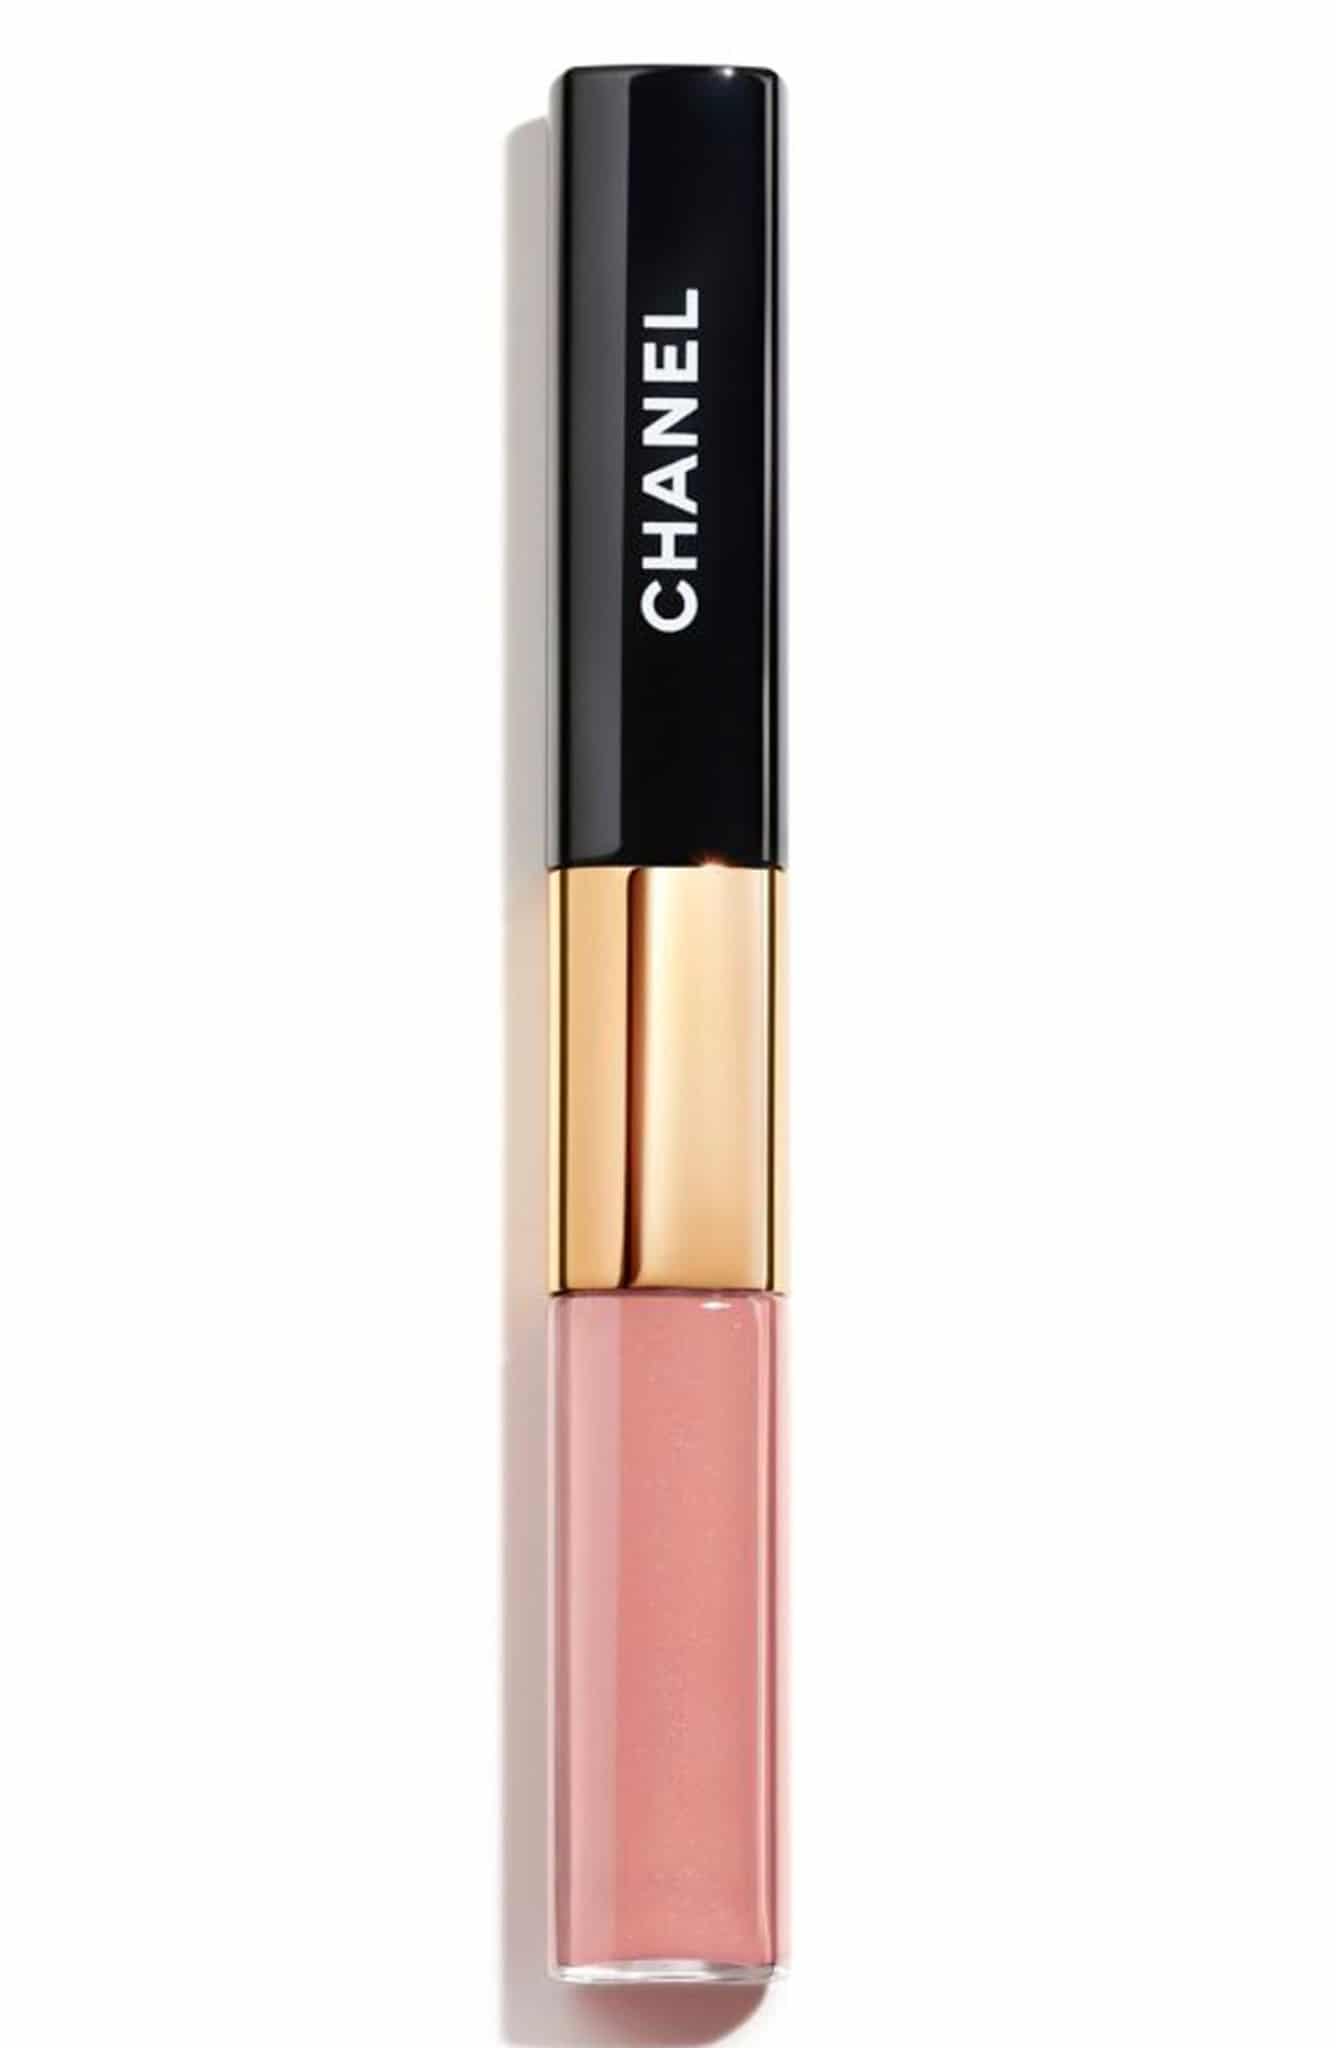 Chanel lipcolor = Chanel lipstick - pink lipstick - pink lipgloss